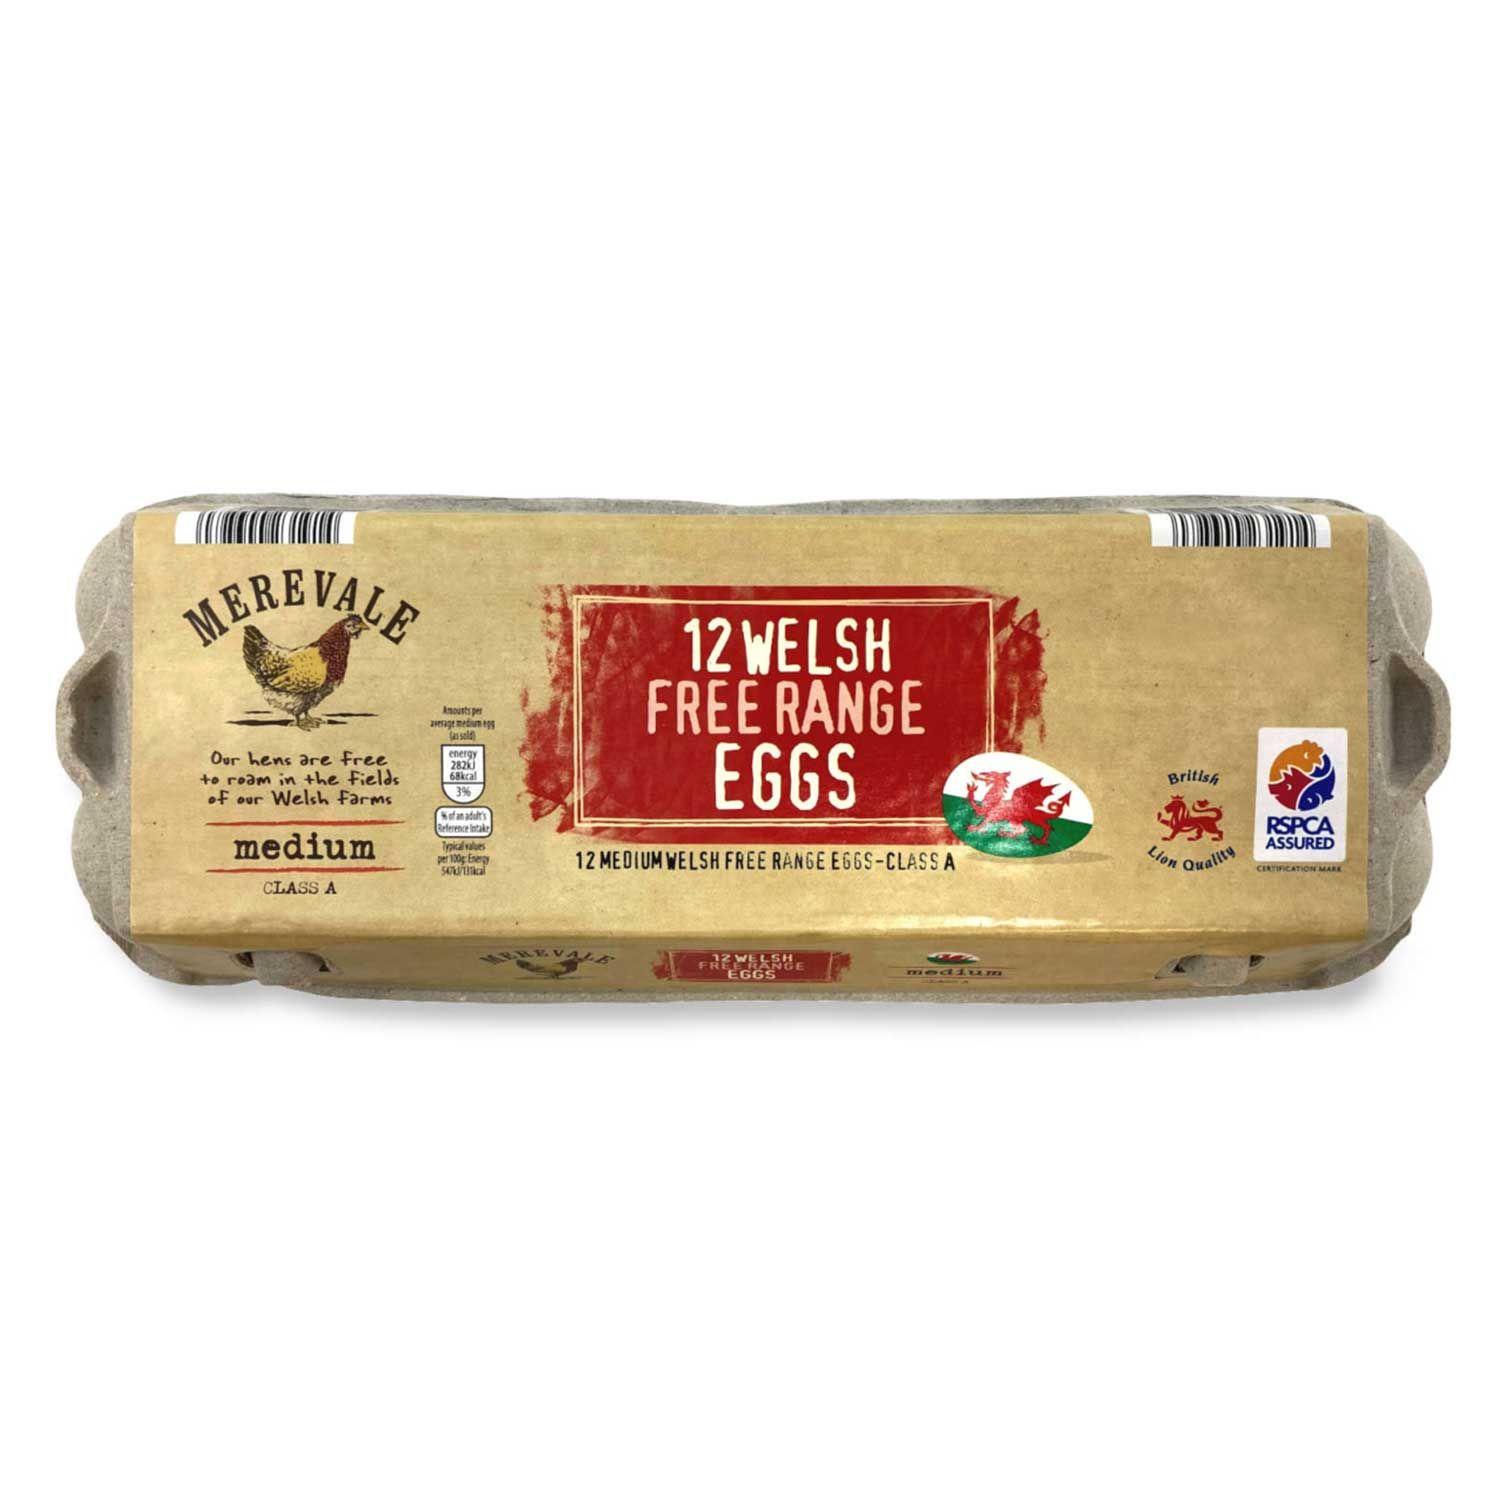 Merevale Large Scottish Free Range Eggs 12 Pack